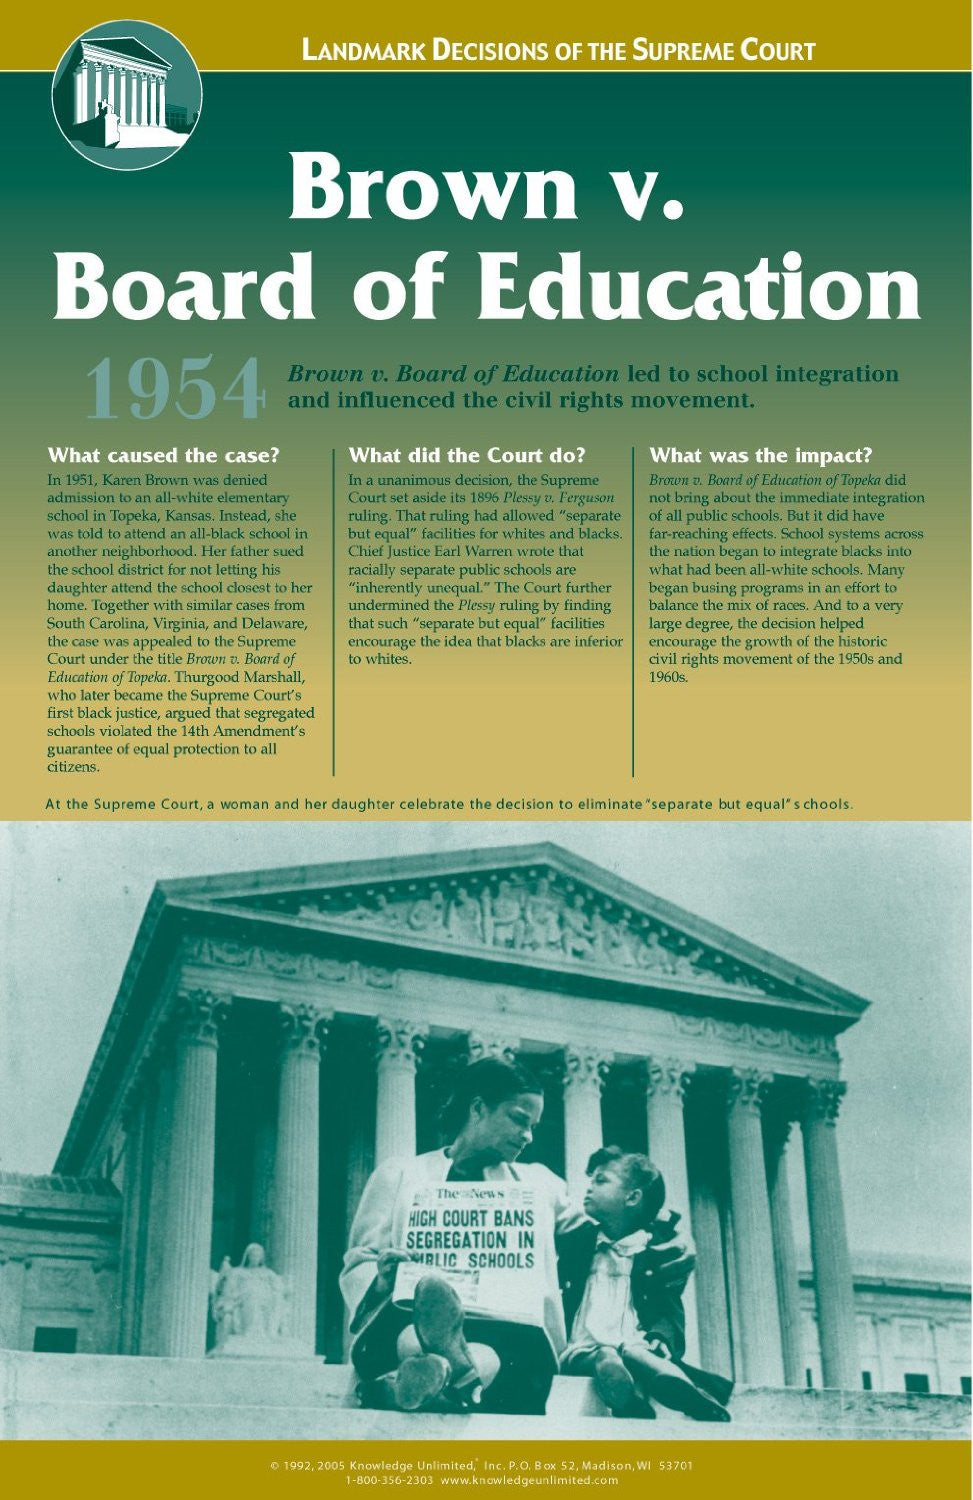 Brown vs. Board of Education Poster by Knoweldge Unlimited